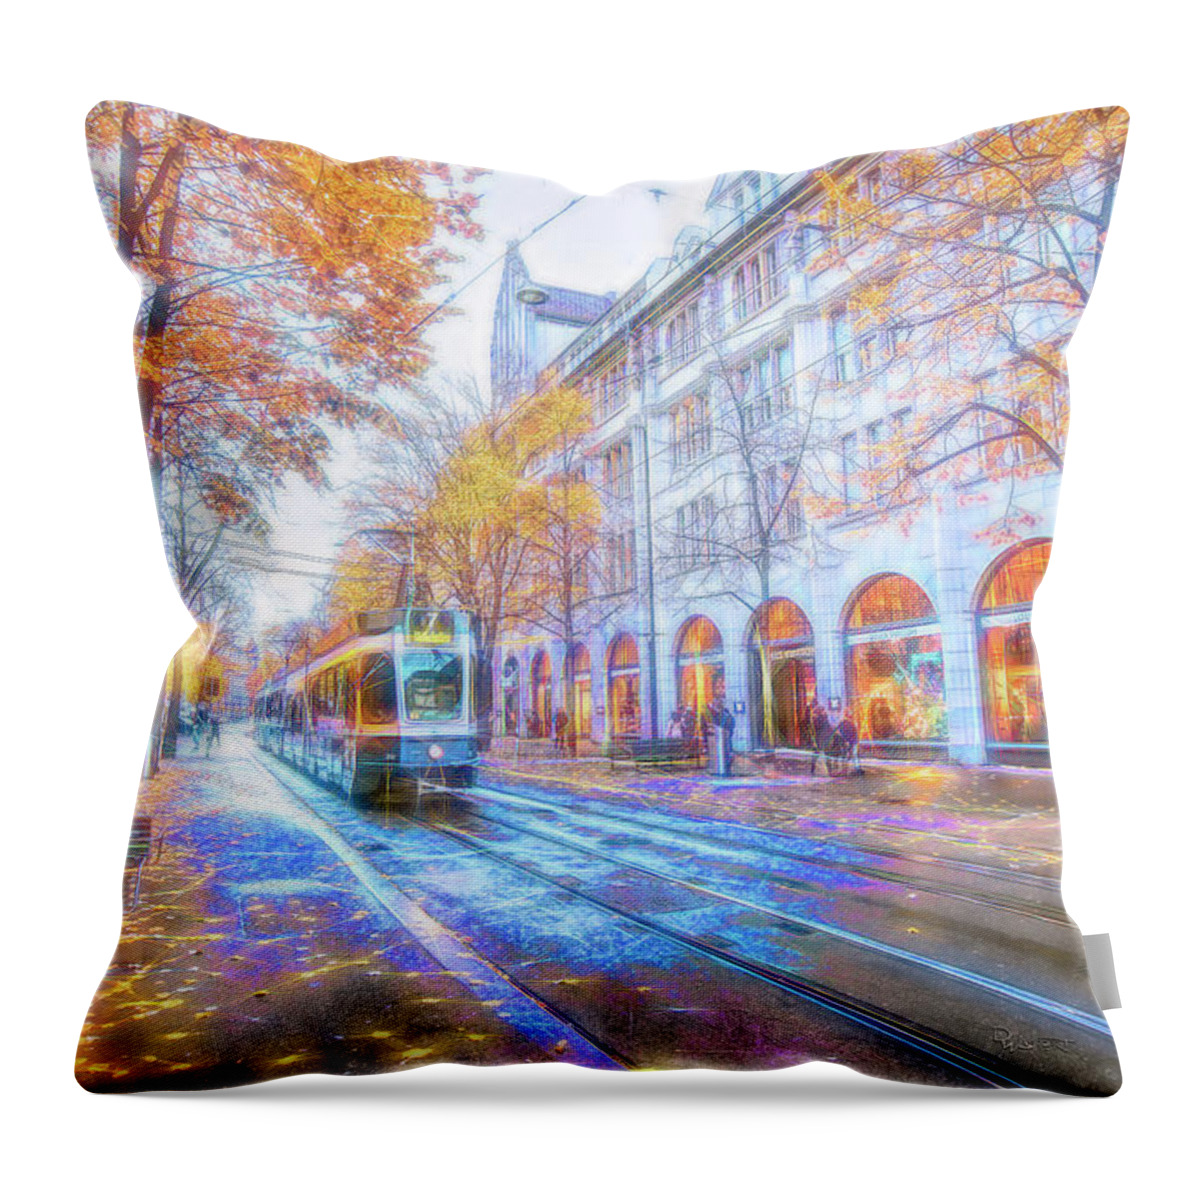 Trolley Throw Pillow featuring the digital art Trolley Street Scene by David Luebbert